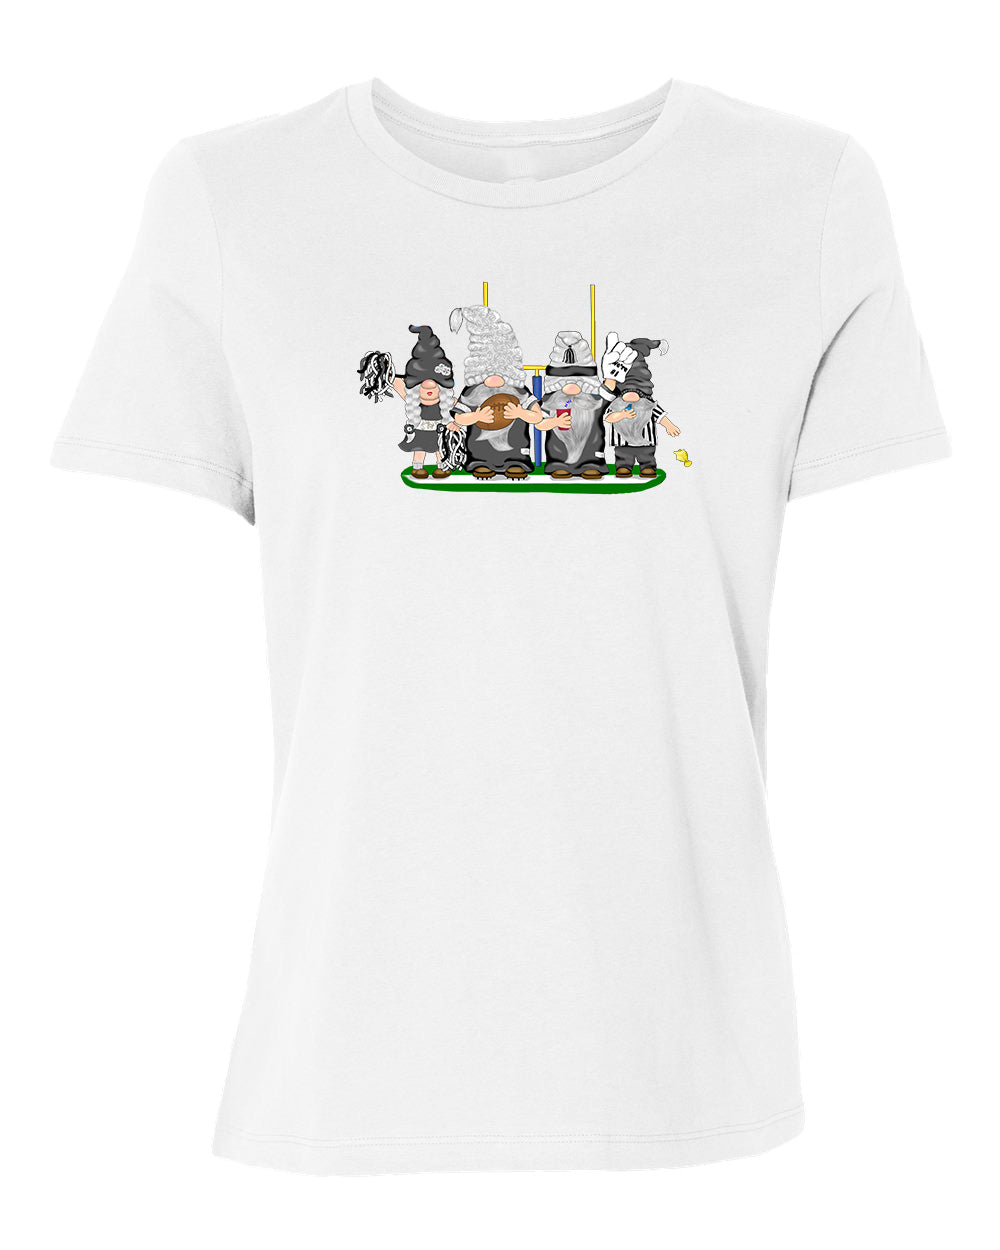 Black & Silver Football Gnomes on Women's T-shirt (similar to Las Vegas)